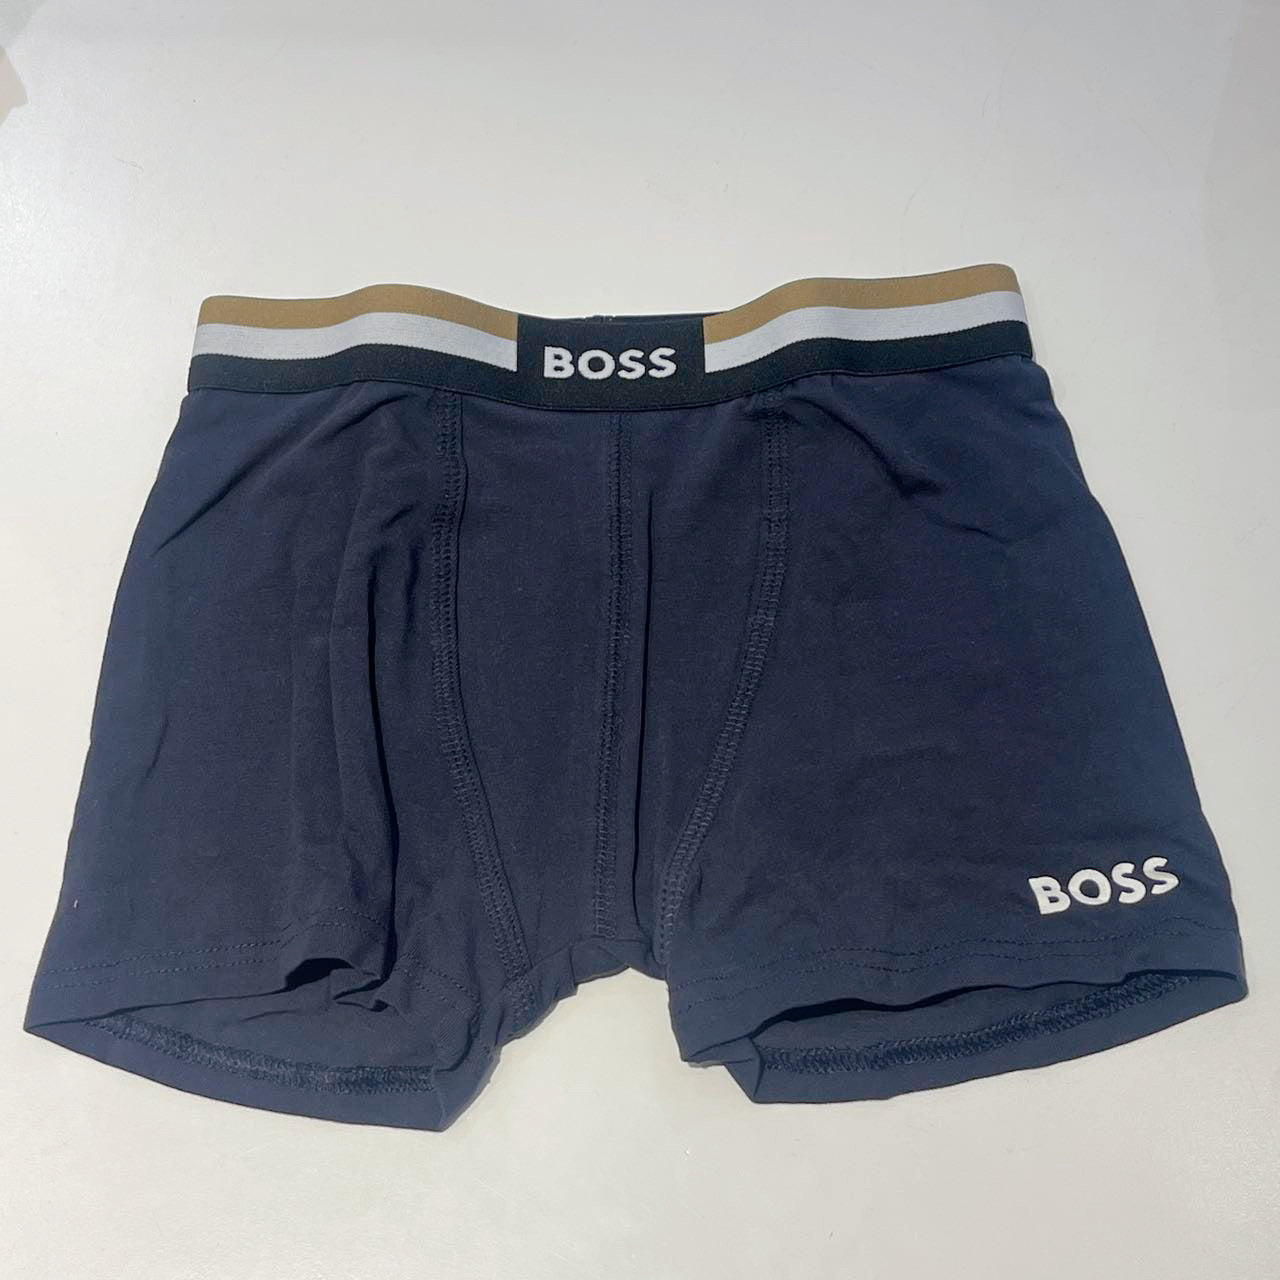 Boss Set of 2 Boxer Shorts(Dark Navy , Grey)